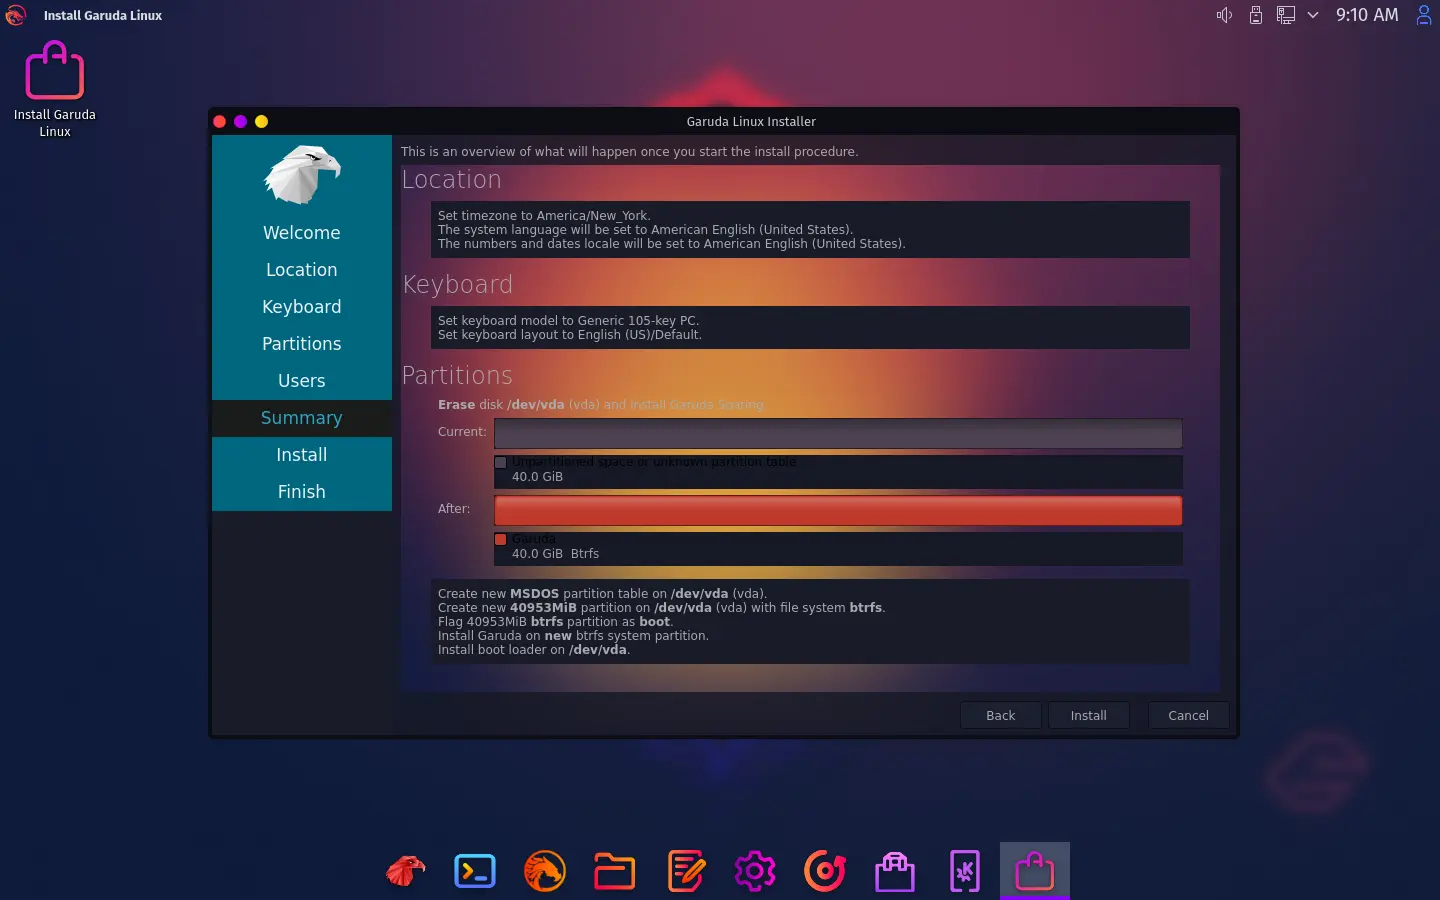 Summary screenshot from Garuda Linux